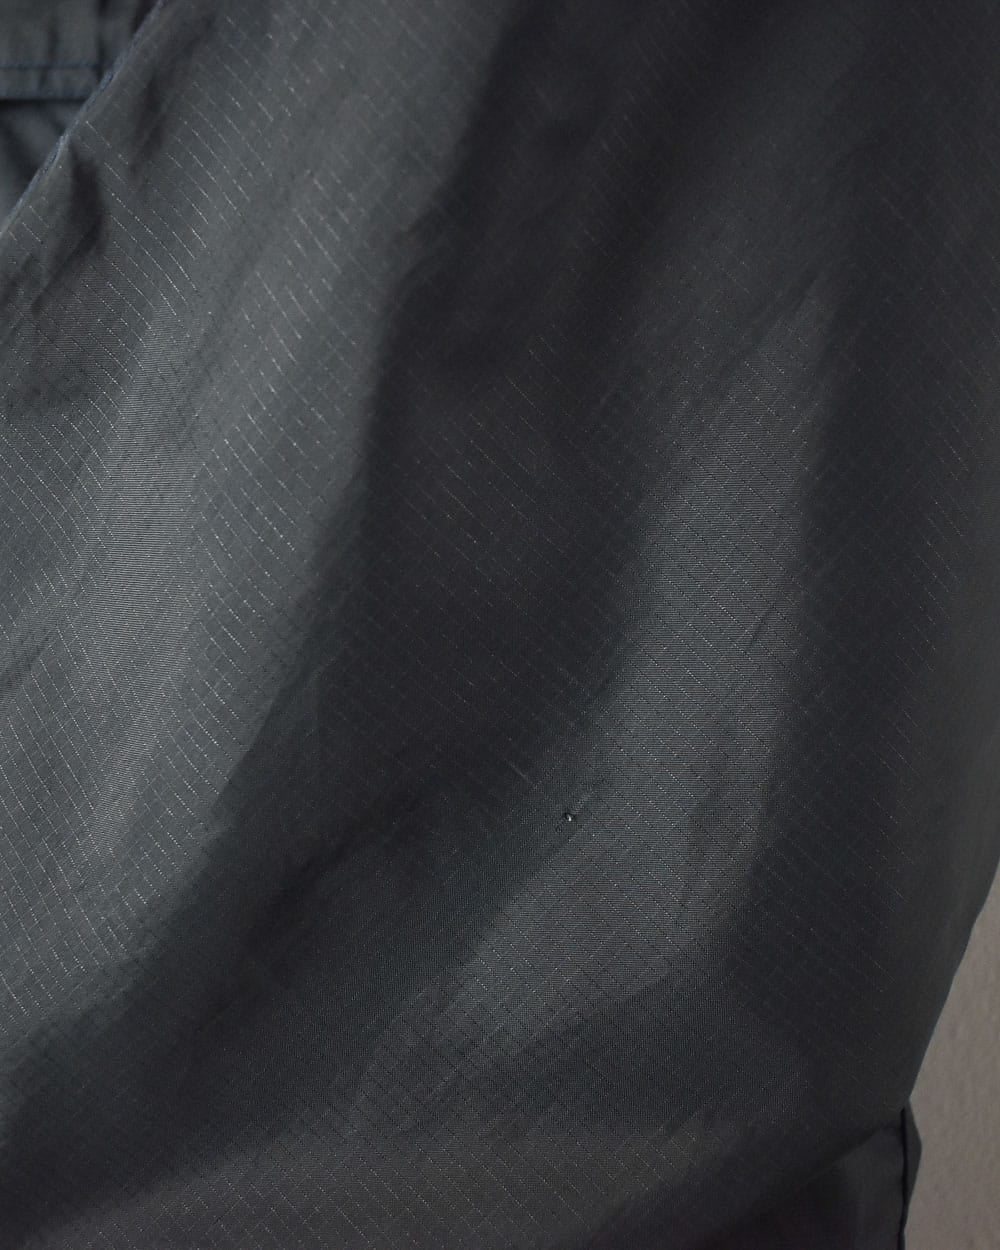 Black Adidas 1/4 Zip Kangaroo Pouch Windbreaker Jacket - Medium